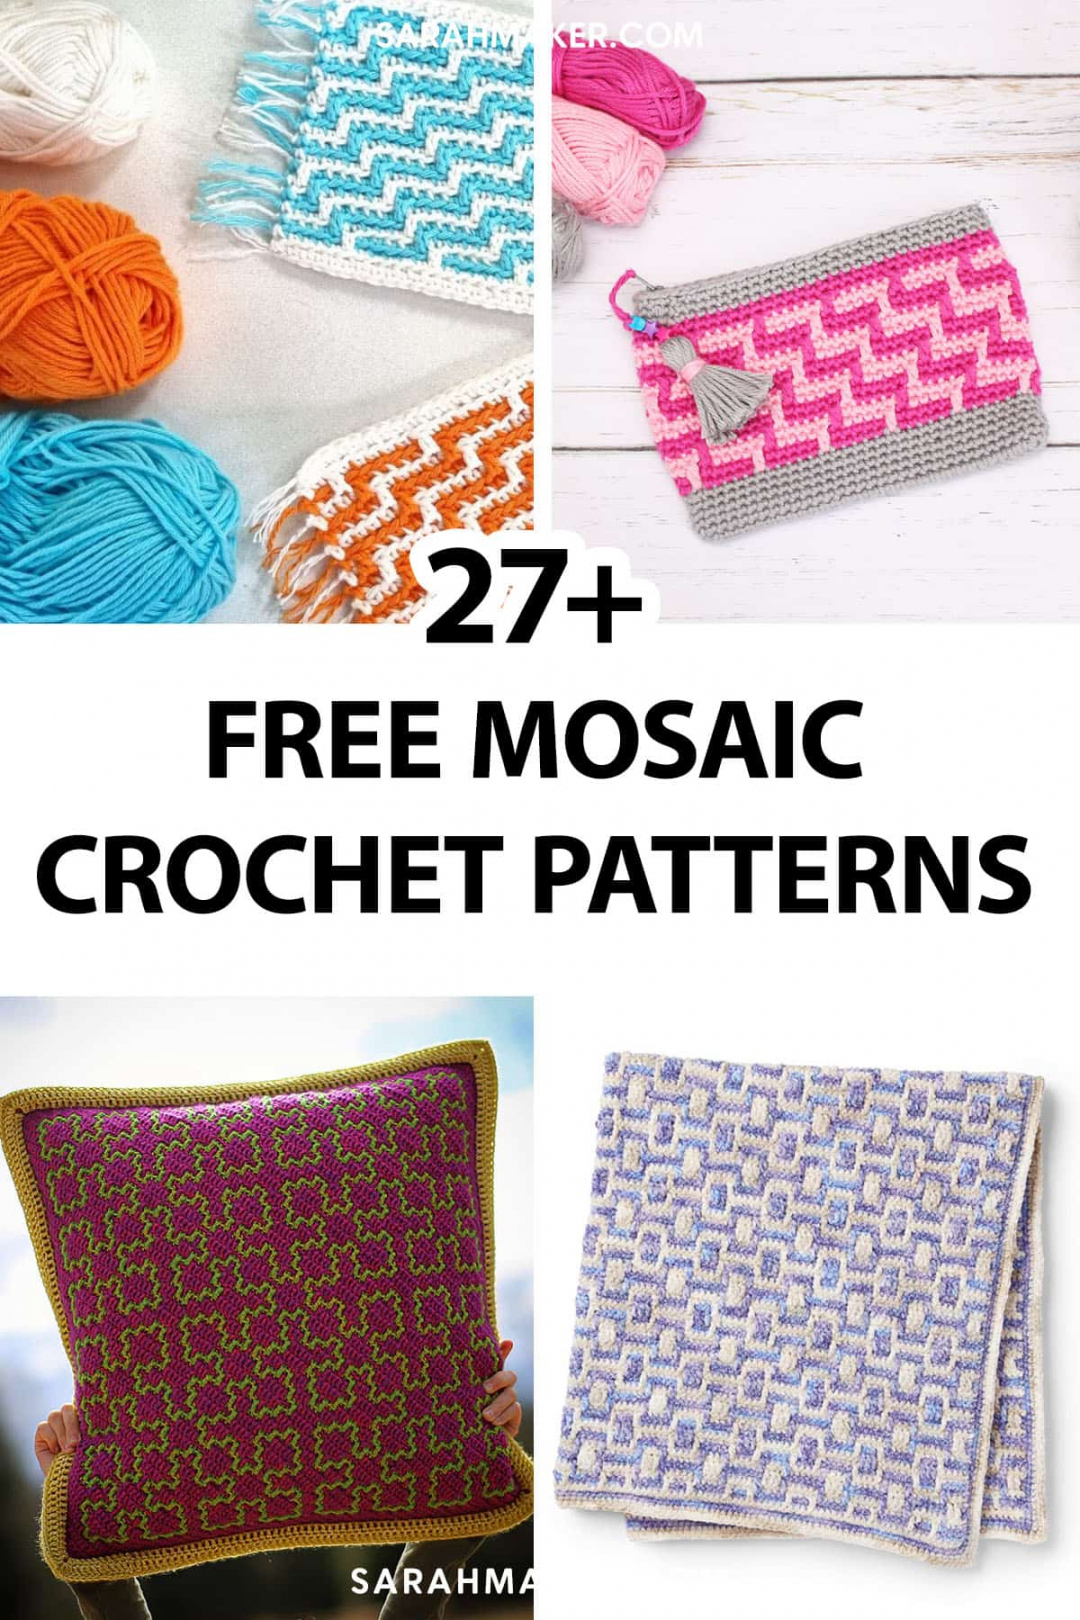 Free Mosaic Crochet Patterns (For All Skill Levels!) - Sarah Maker - FREE Printables - Printable Mosaic Crochet Patterns Free